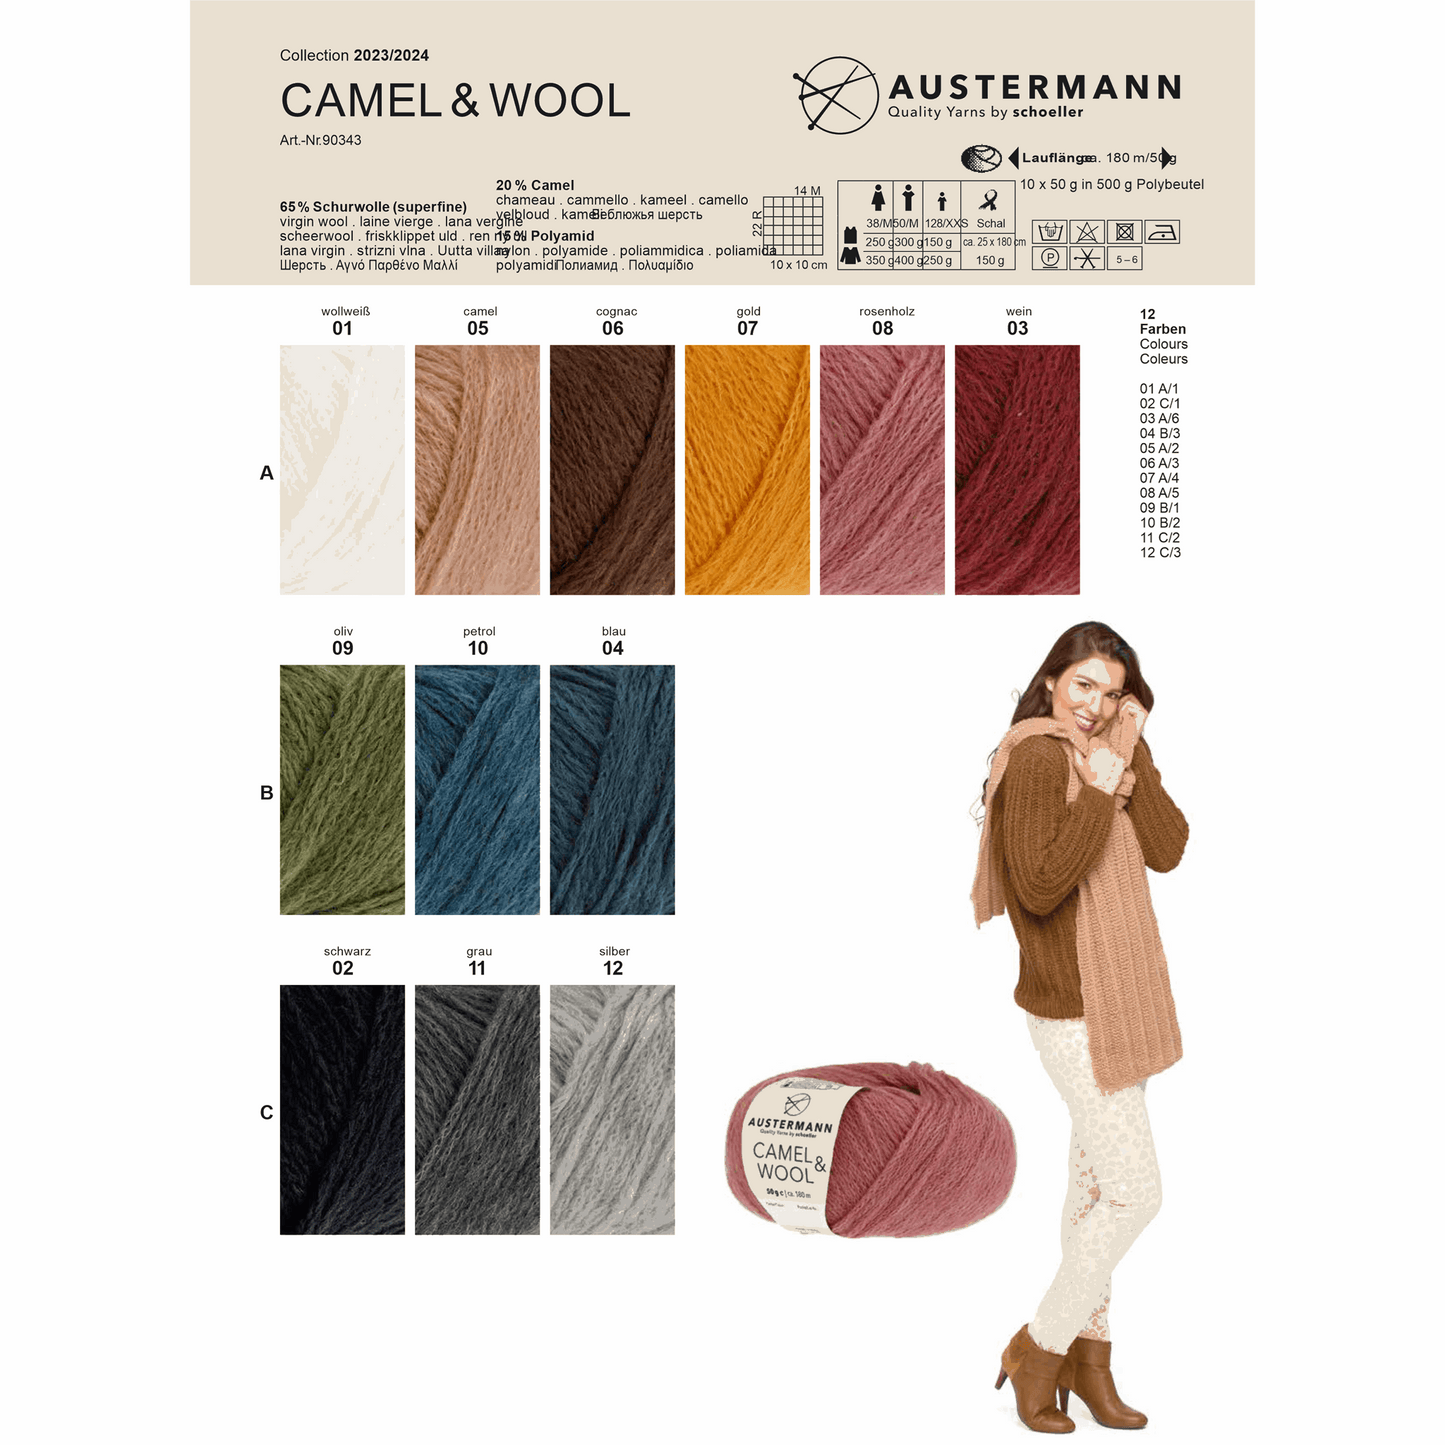 Cameliert& Wool 50g, 90343, Farbe 1, wollweiß